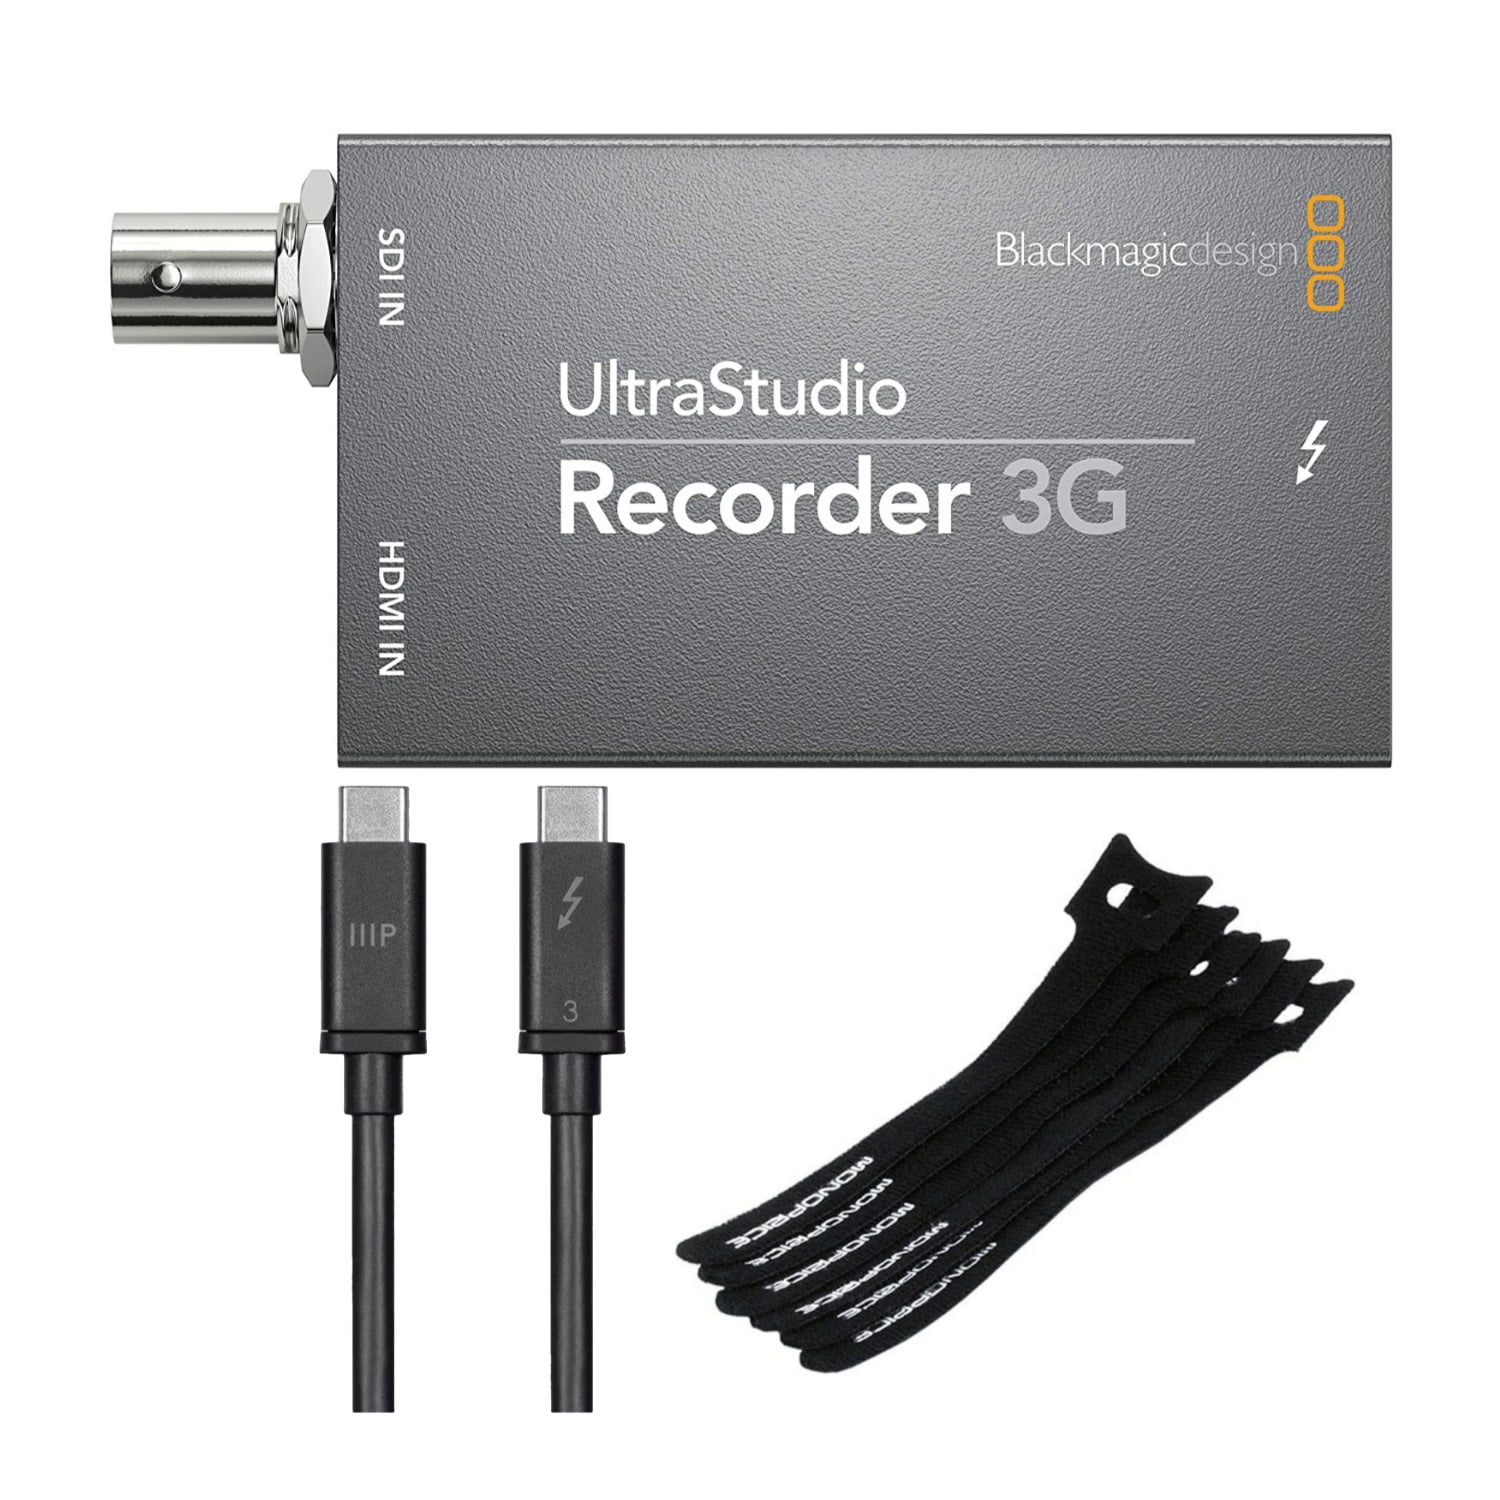 BlackmagicDesign UltraStudio Recorder 3G